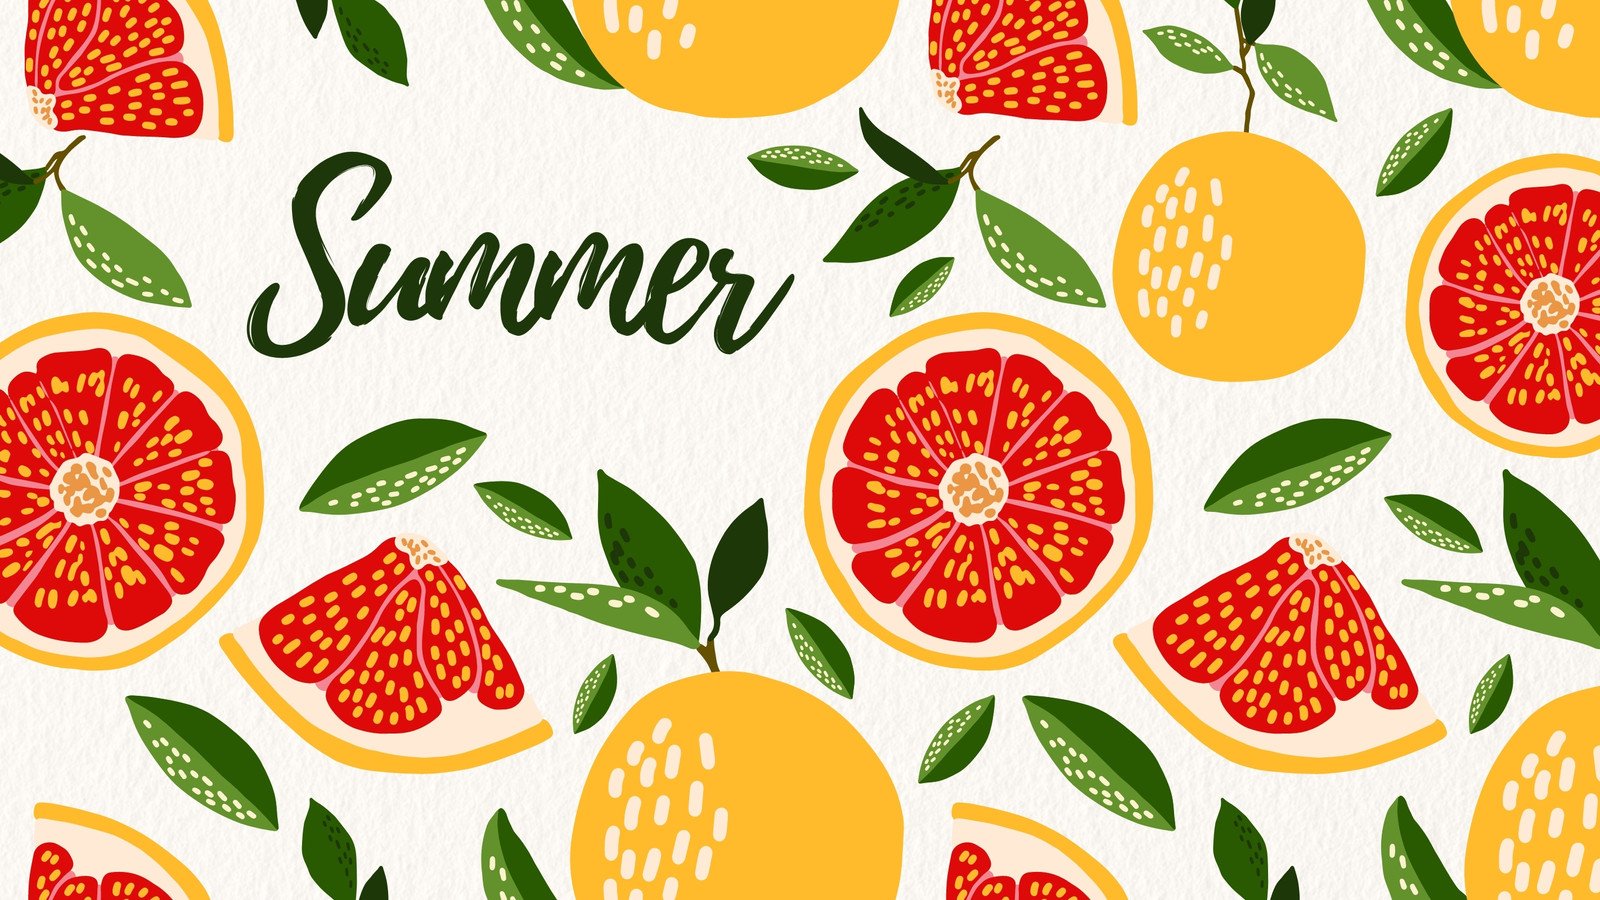 Free and customizable summer desktop wallpaper templates | Canva